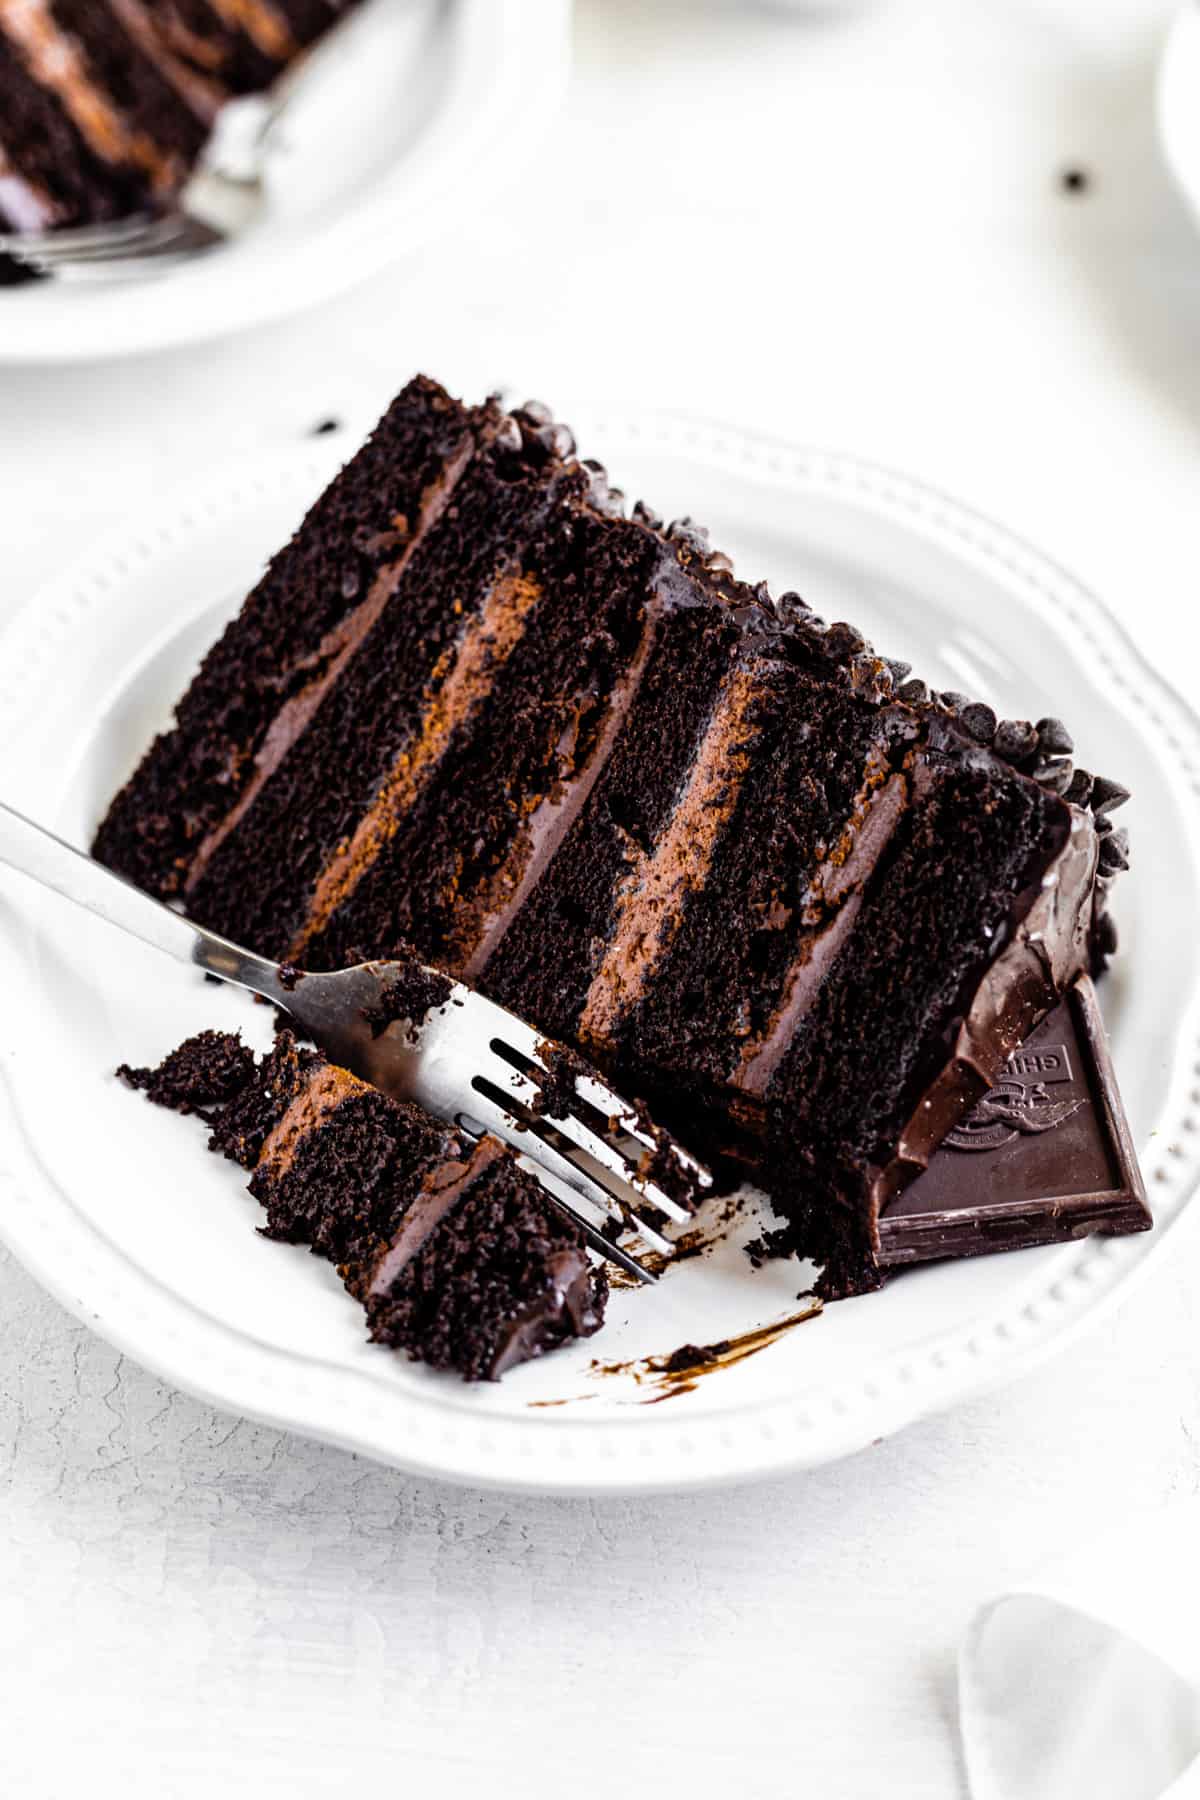 Vegan Chocolate Cake - The BEST Recipe!